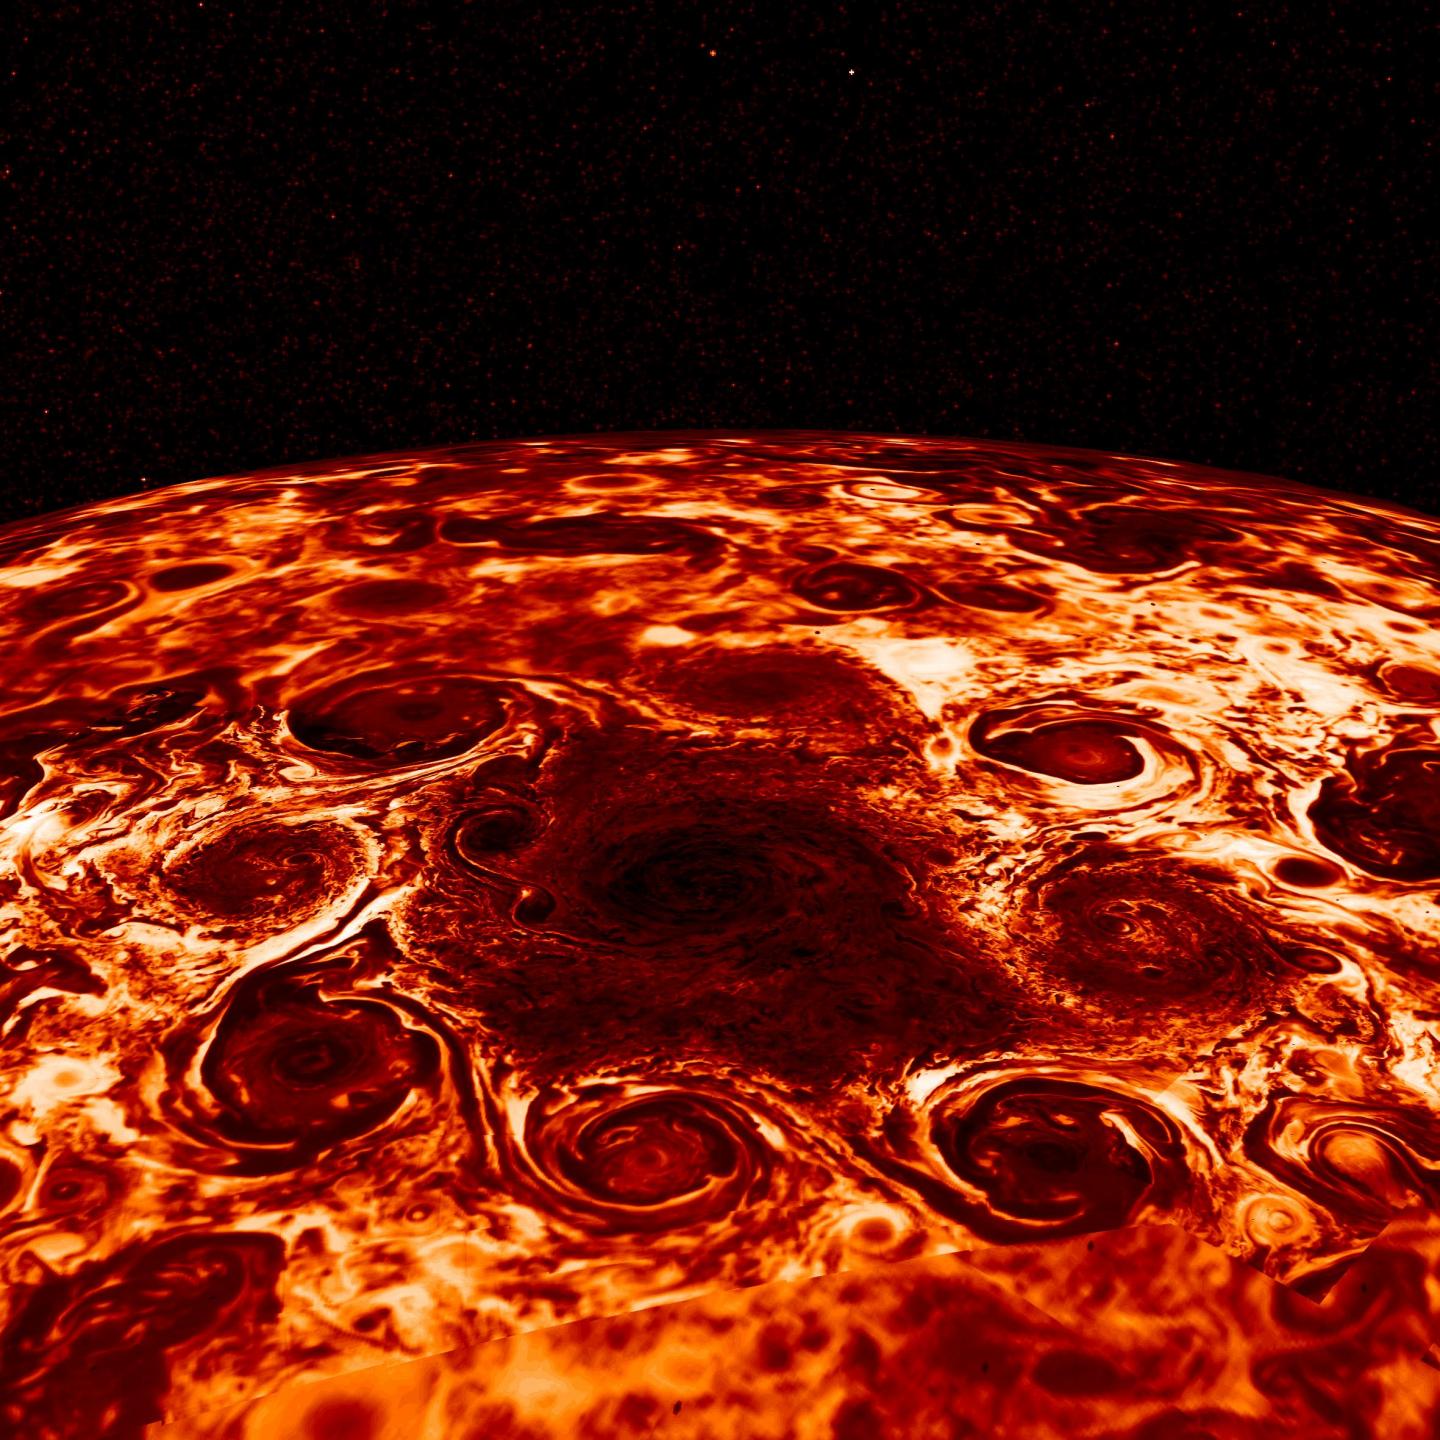 Cyclone storms on Jupiter